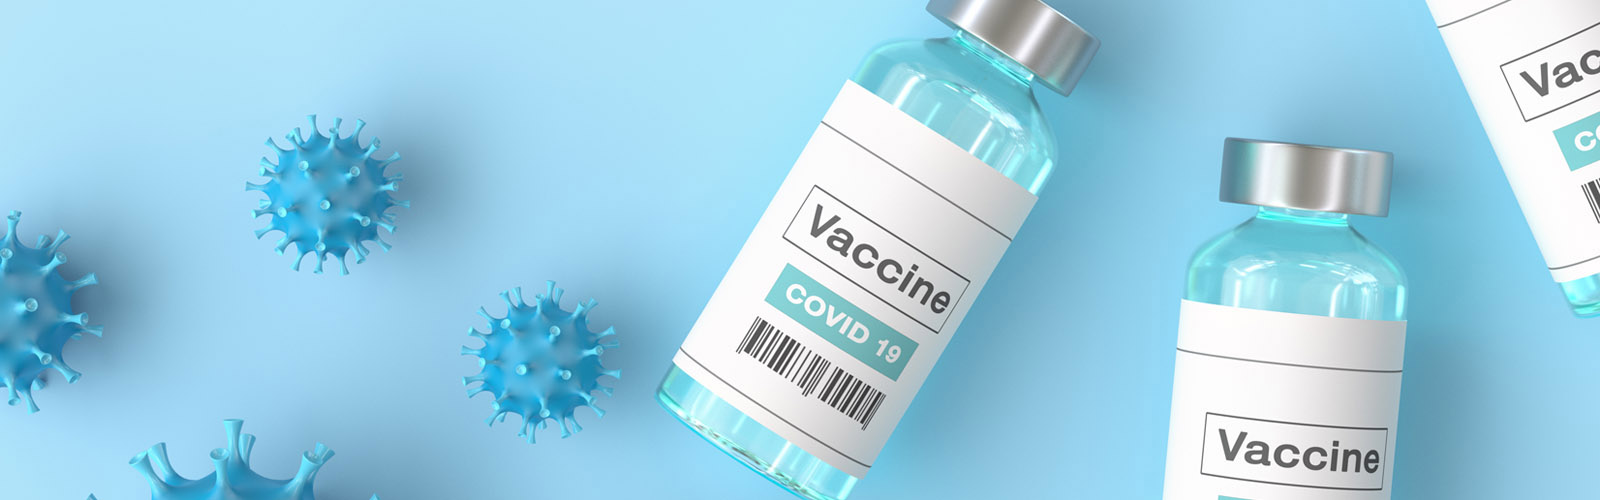 Vaccine viles for COVID-19 virus